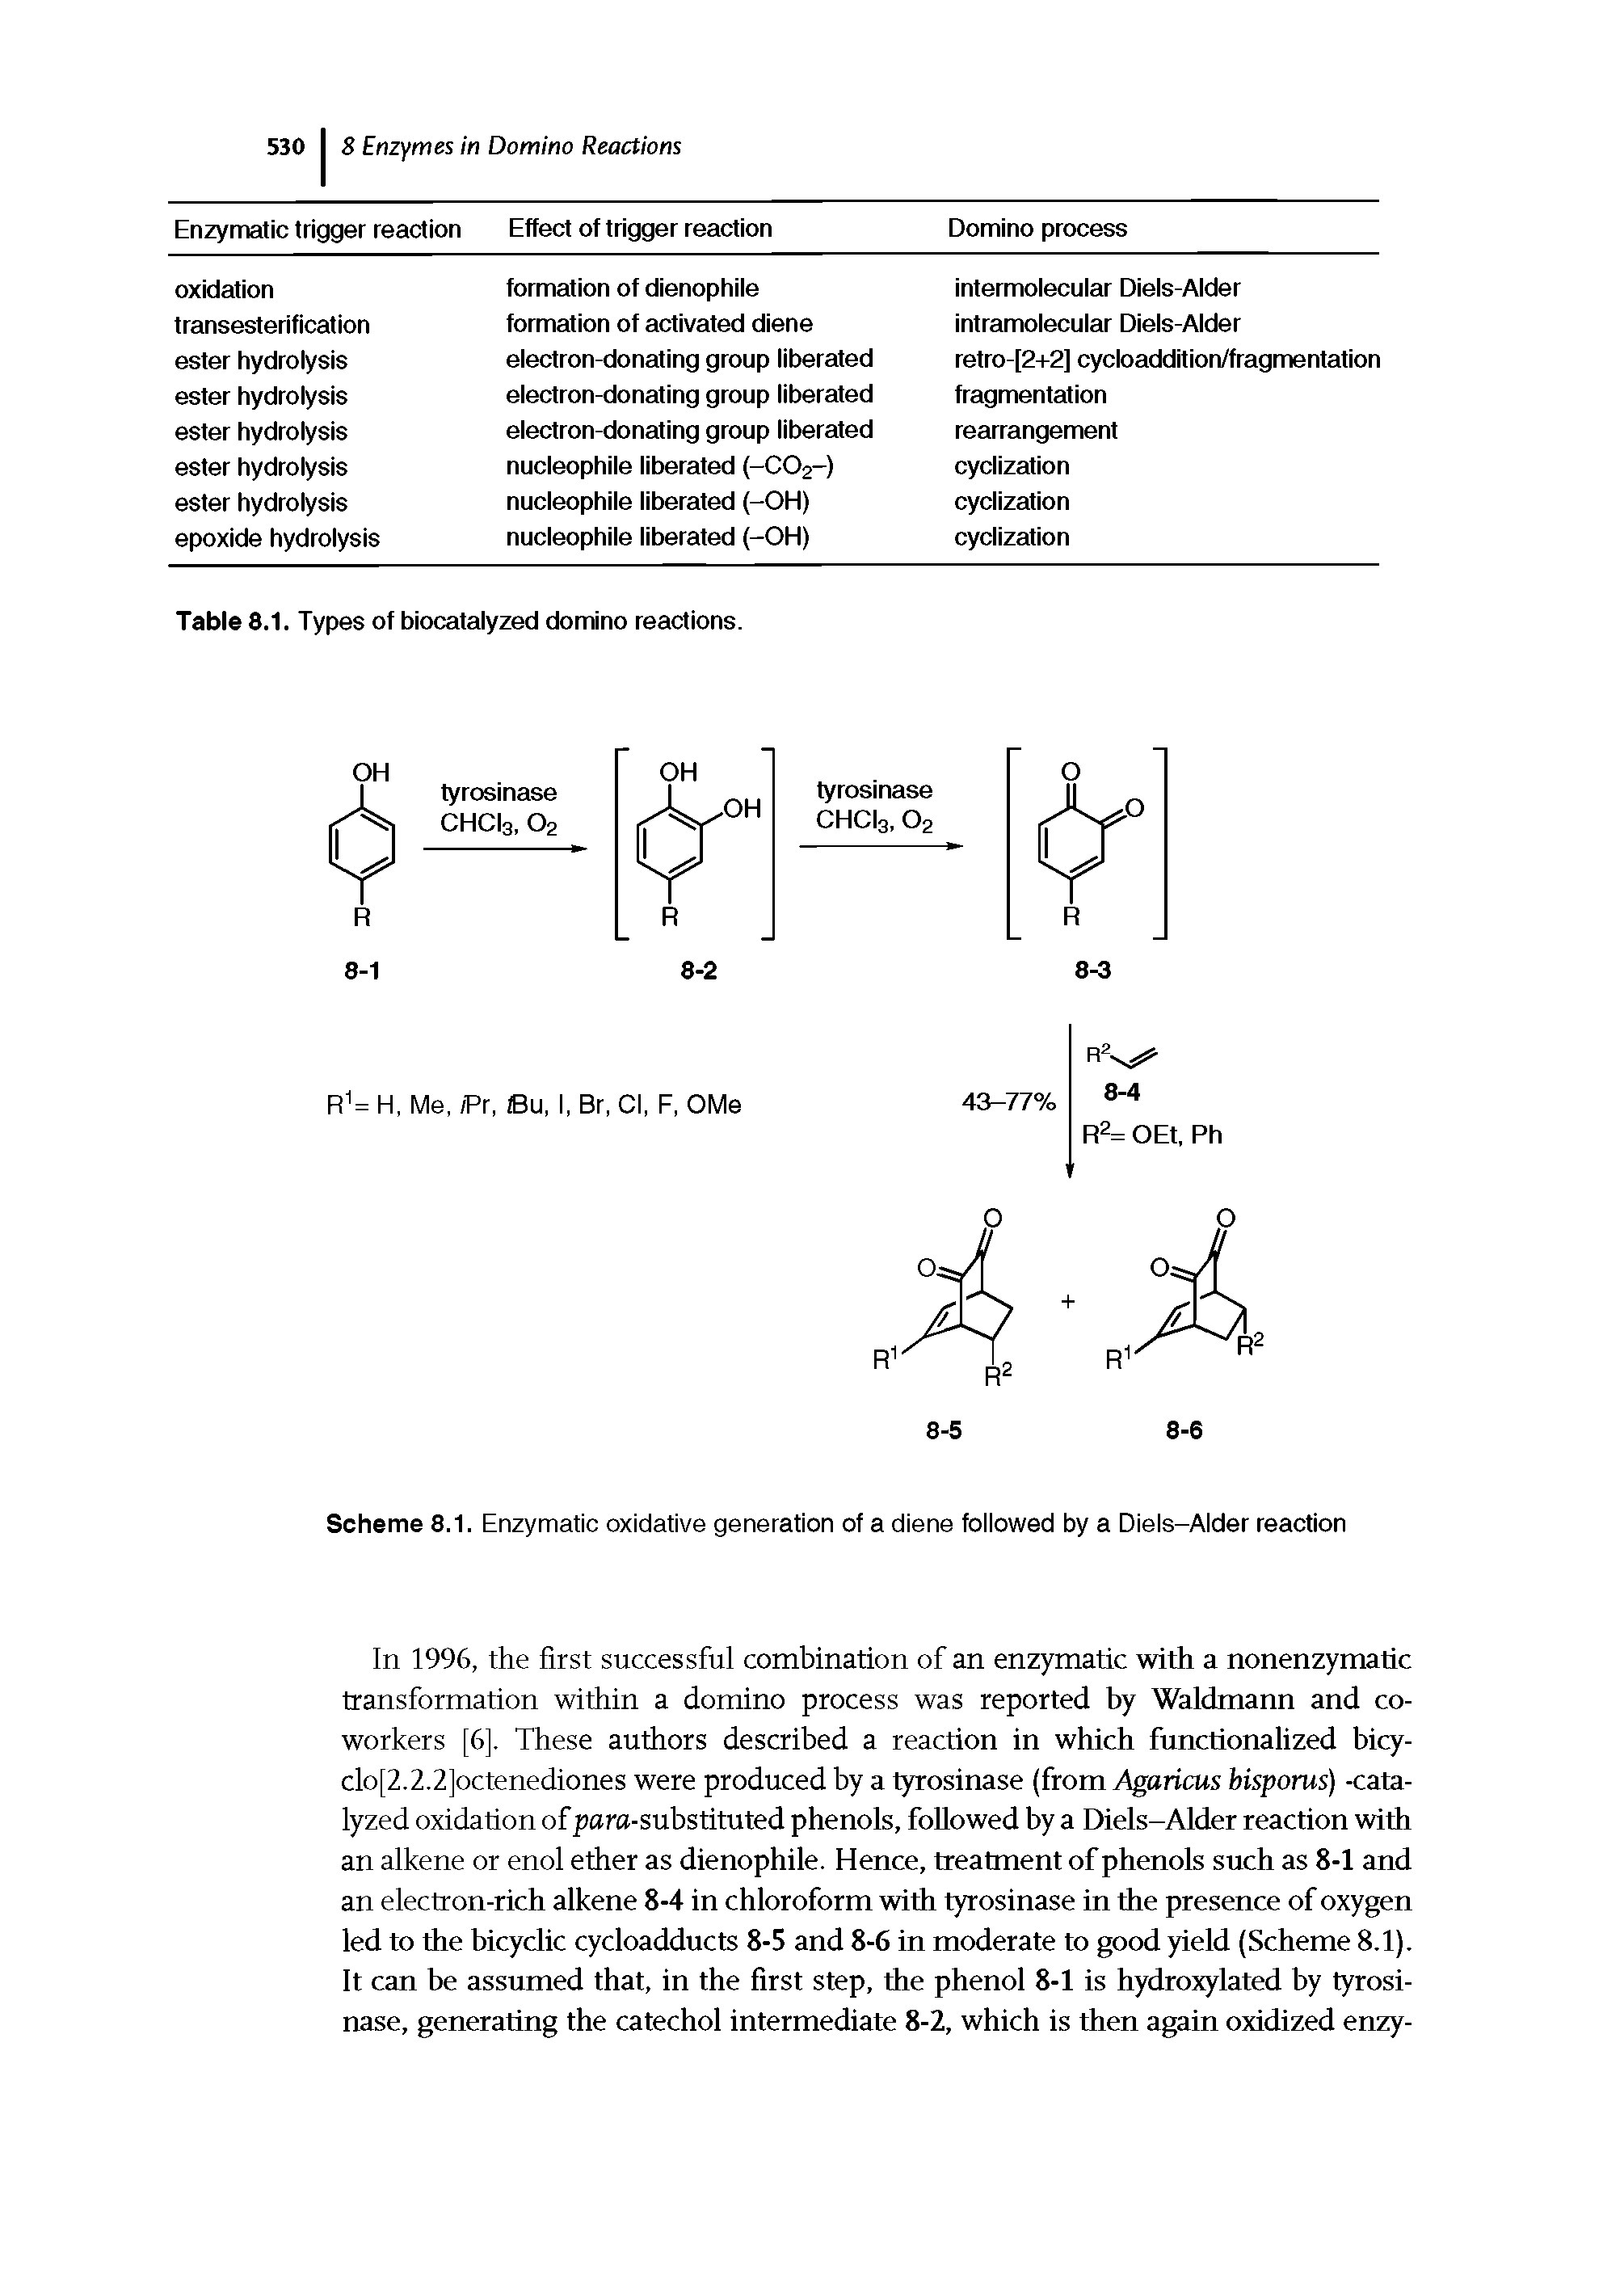 Scheme 8.1. Enzymatic oxidative generation of a diene followed by a Diels-Alder reaction...